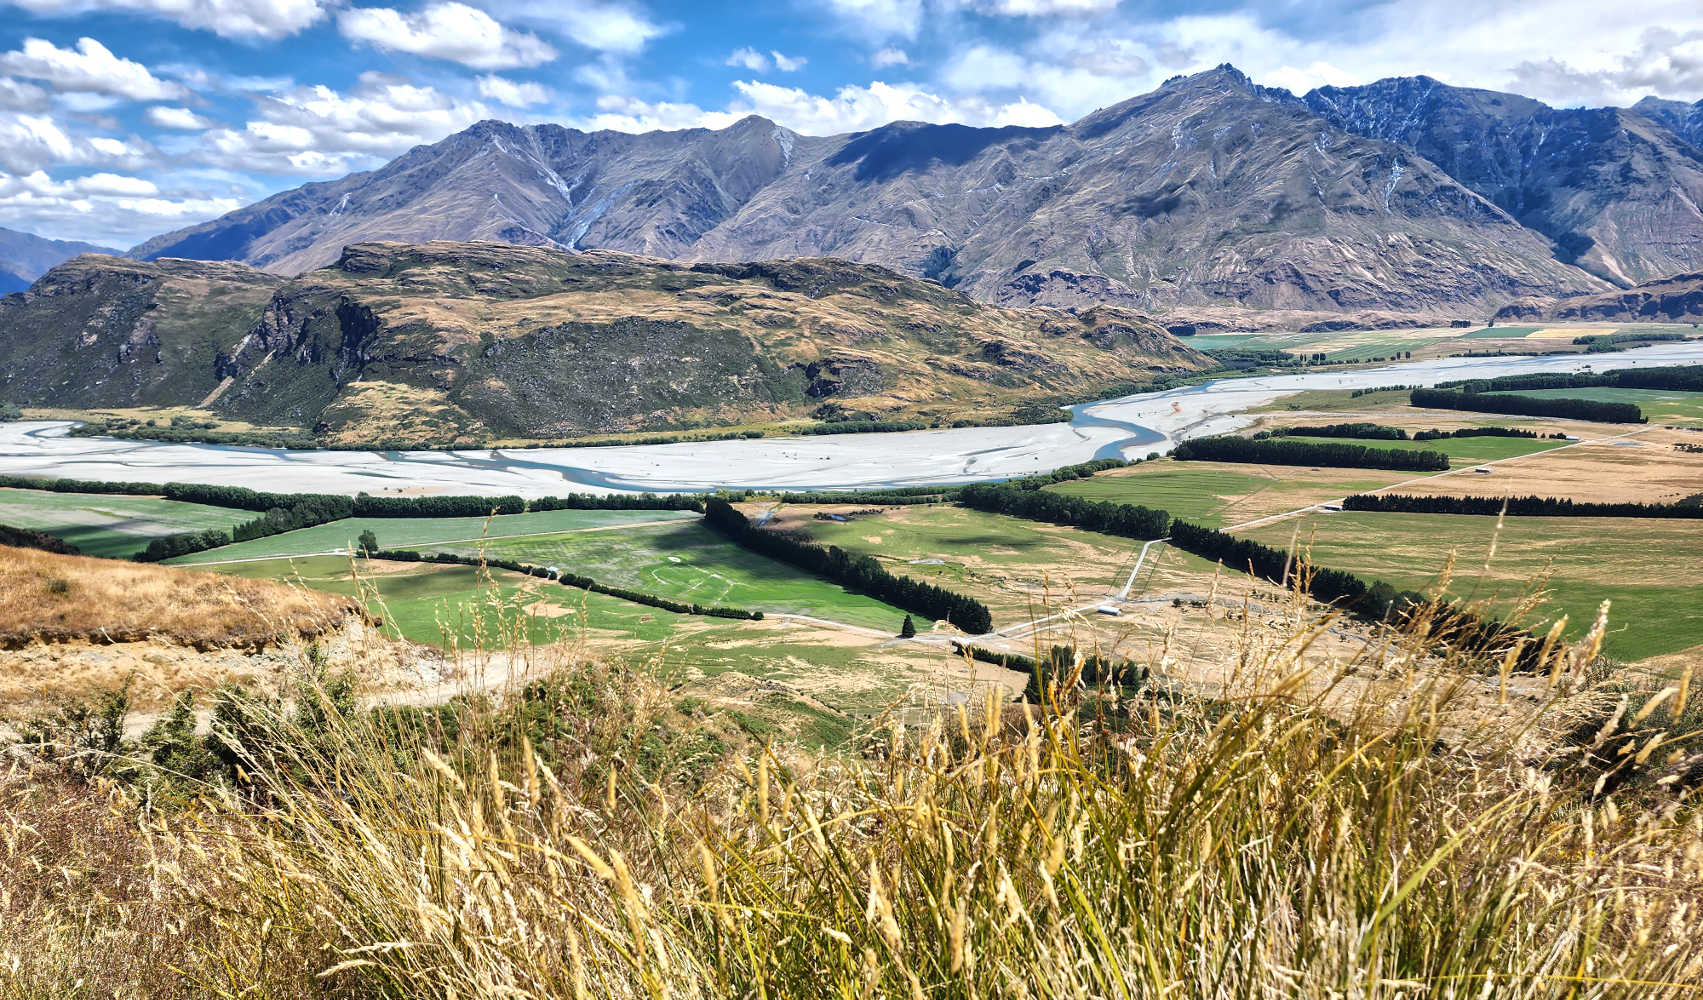 Matukituki (Tukituki) River & Valley, New Zealand